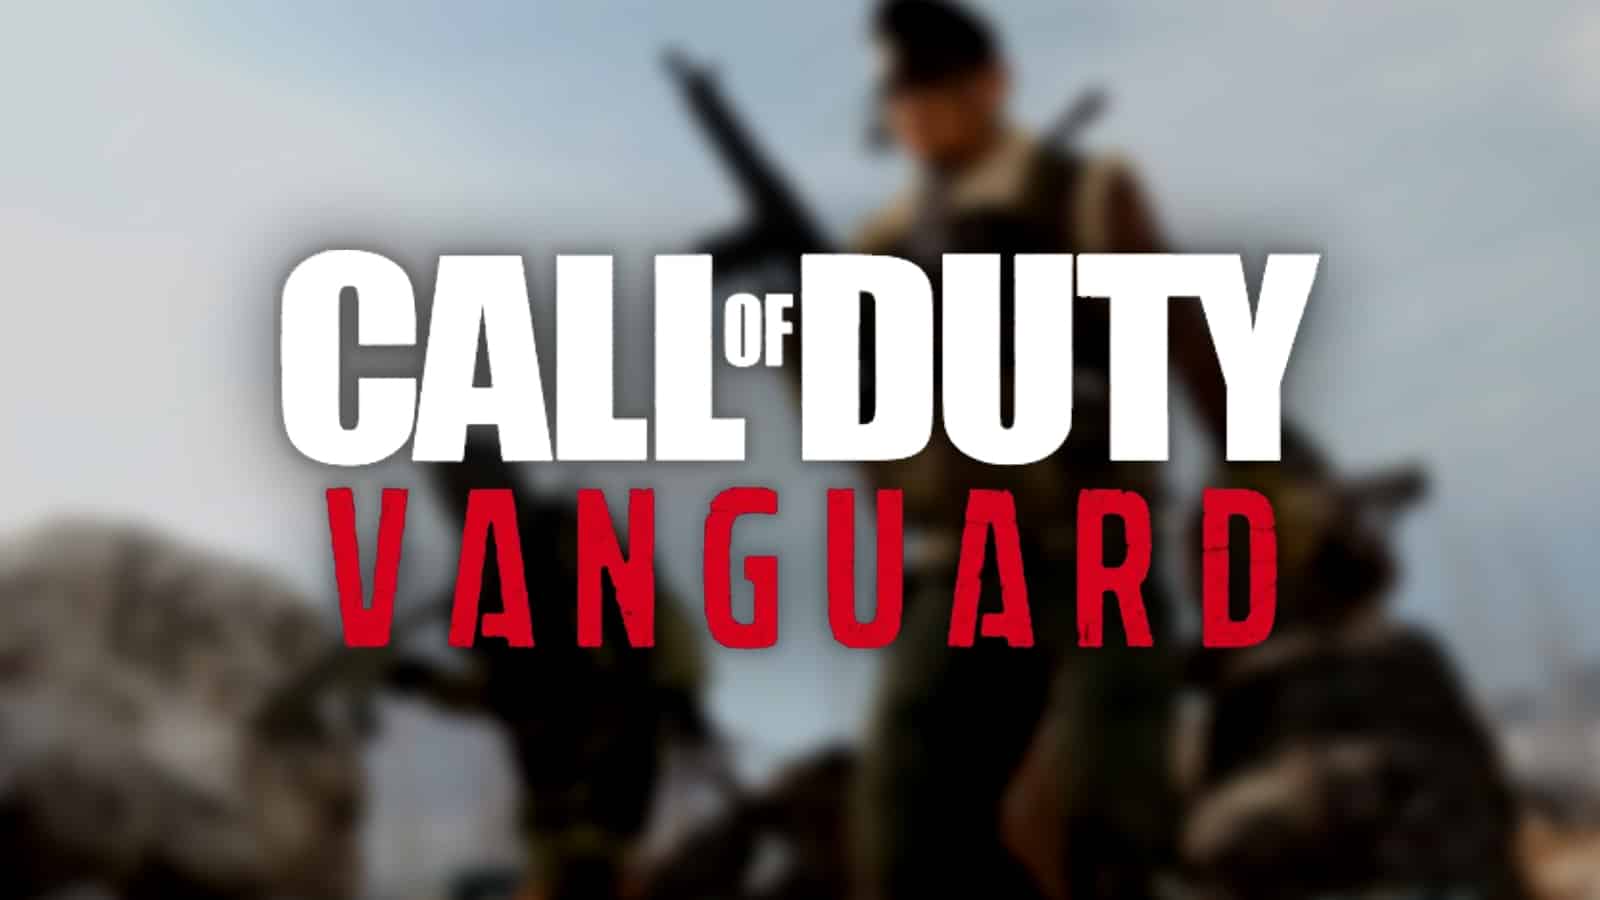 Call of Duty Vanguard Gameplay Details, New Warzone Map, Anti Cheat! 